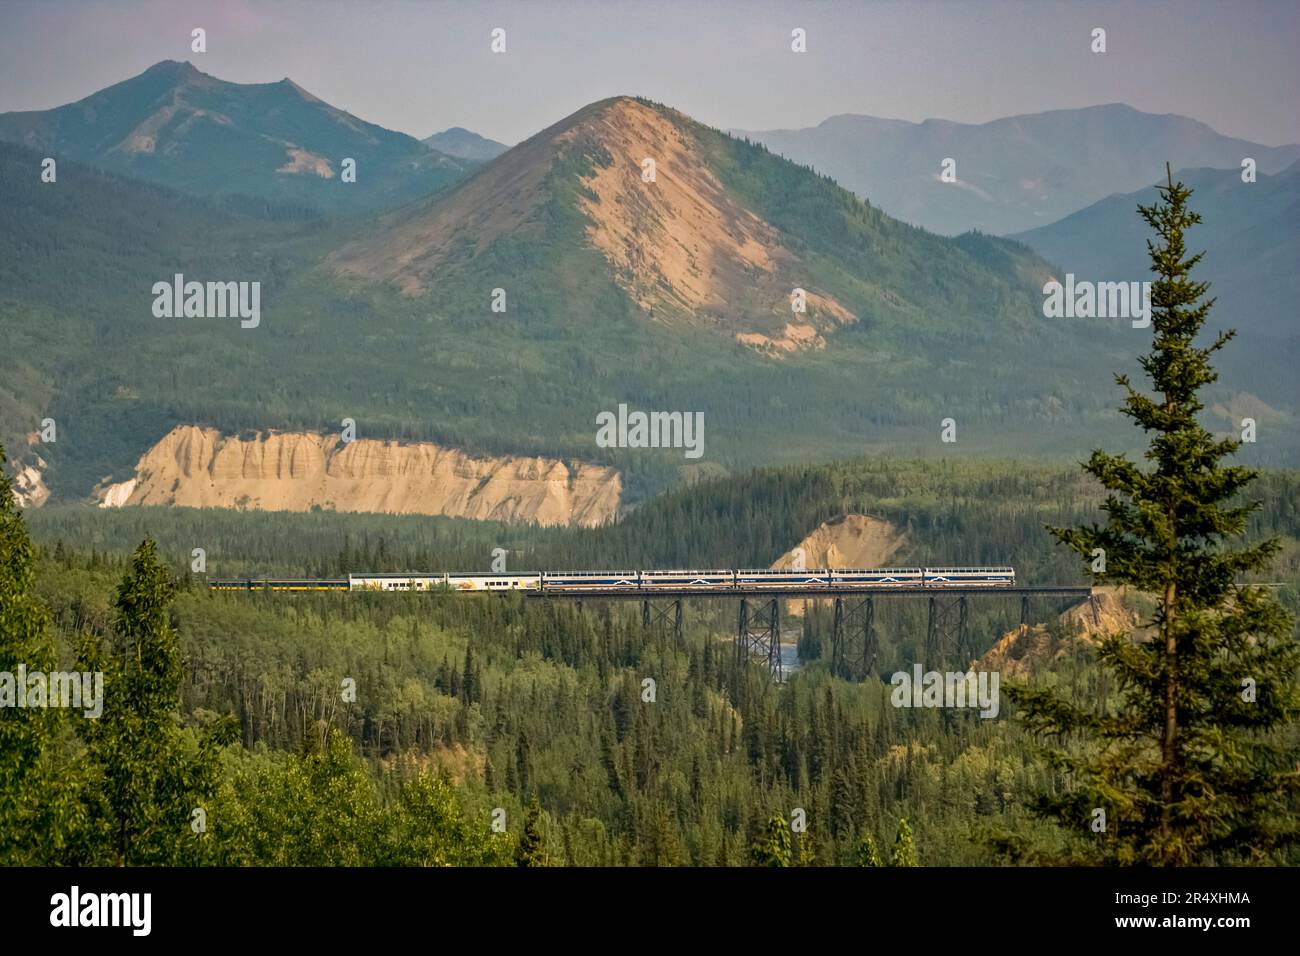 El ferrocarril de Alaska en un alto puente de caballete. Foto de stock